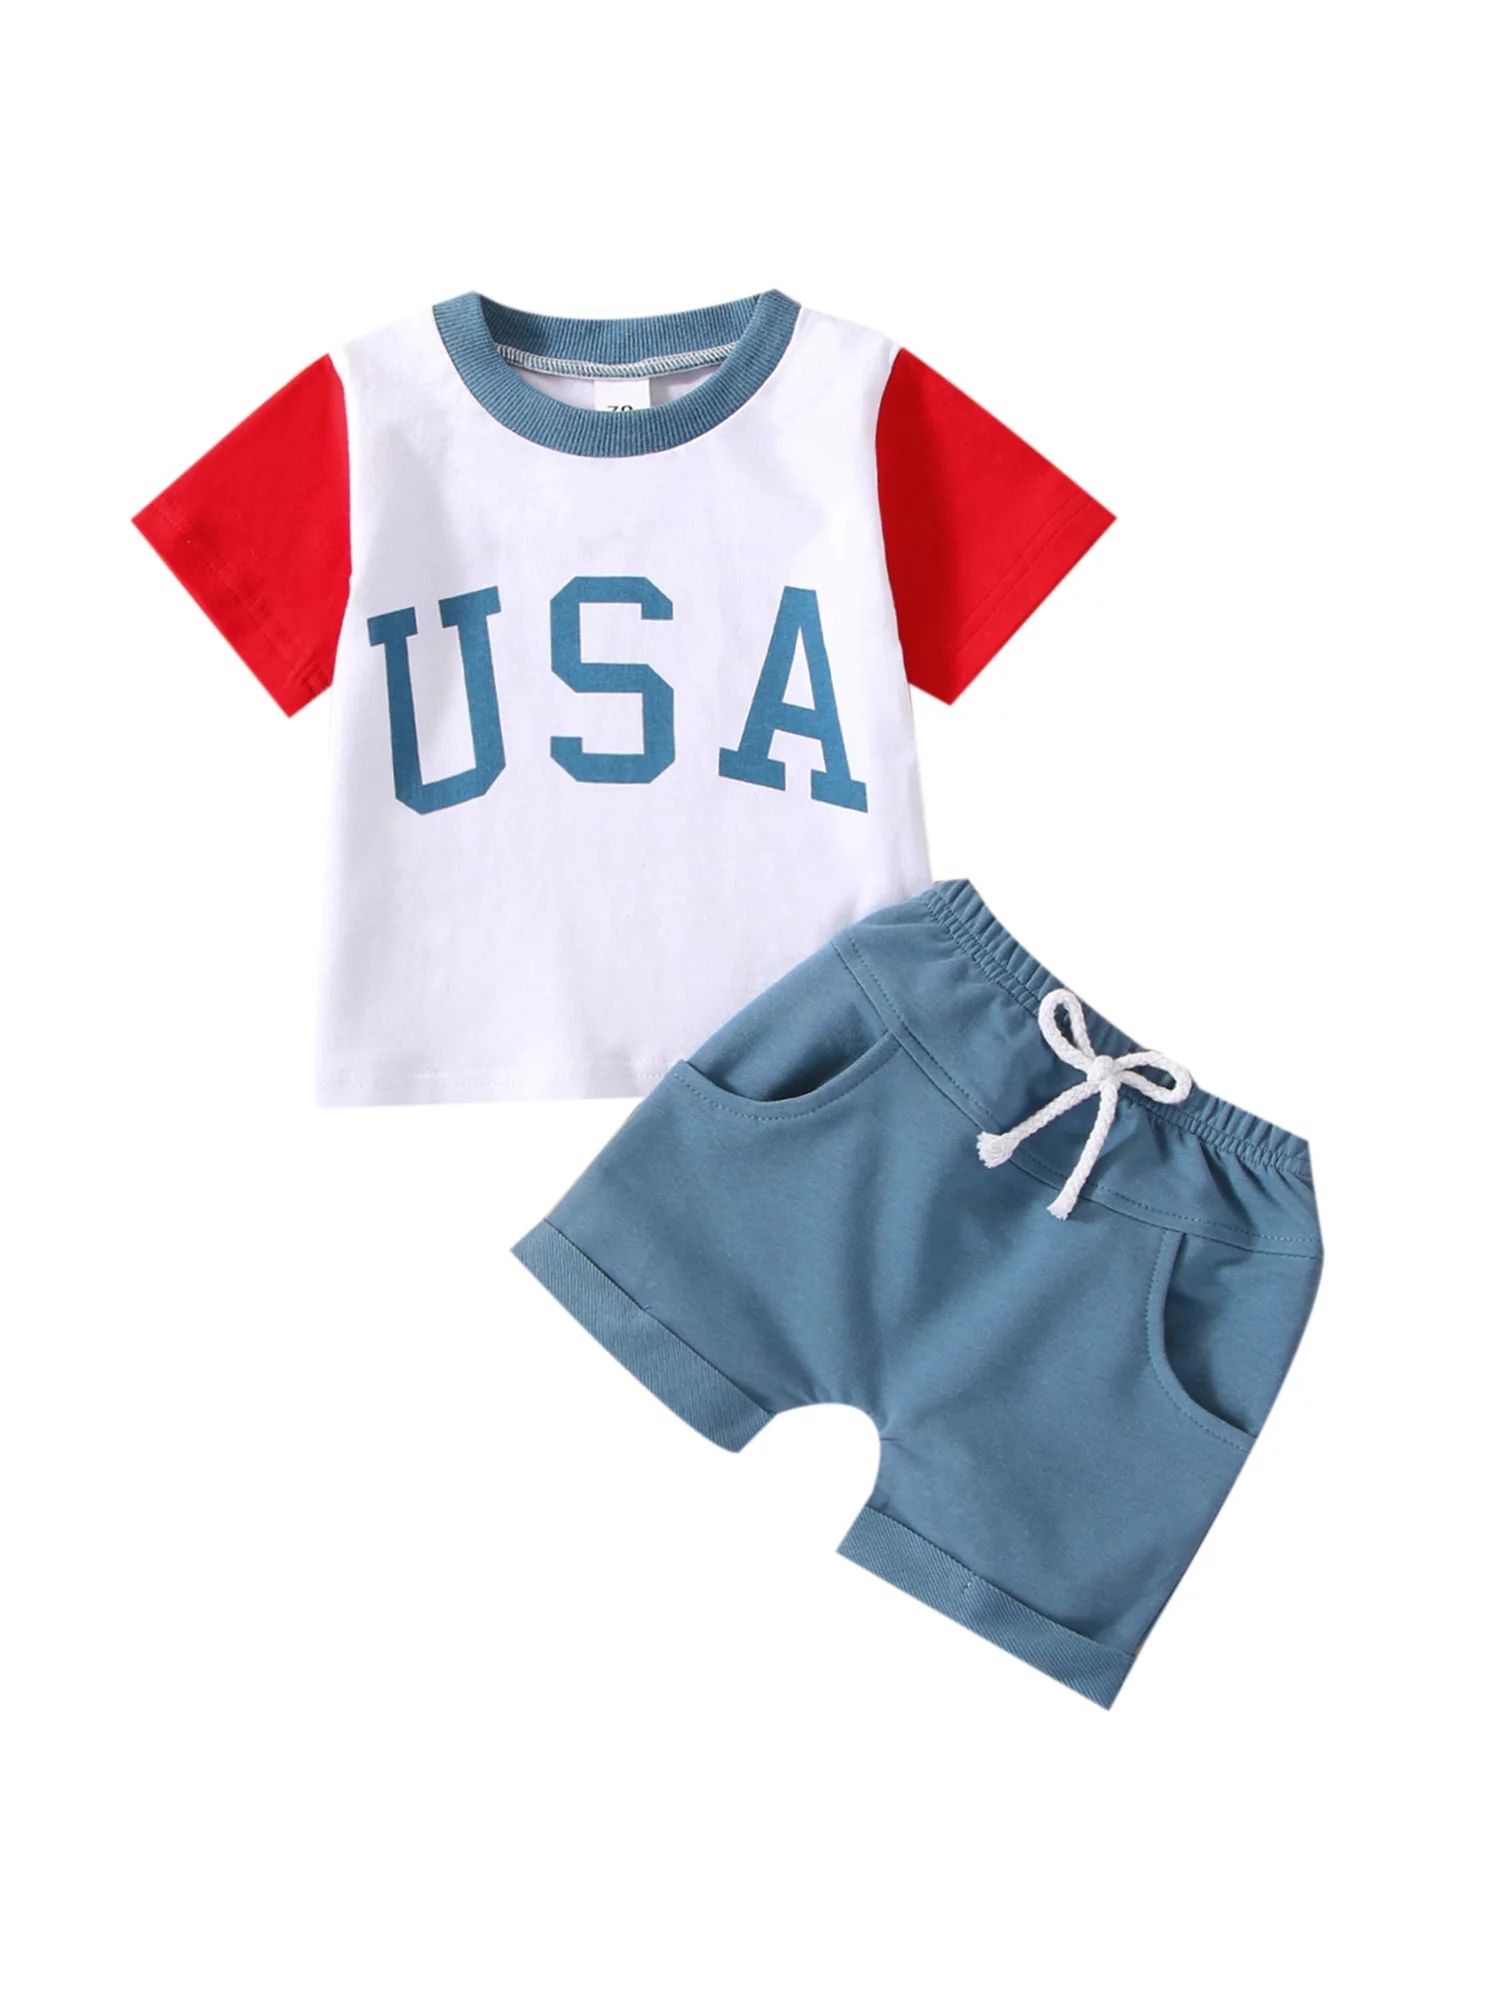 jaweiw Newborn Baby Boy 4th of July Outfit USA Tees Shirt Tops Jogger Shorts Set 2Pcs Independenc... | Walmart (US)